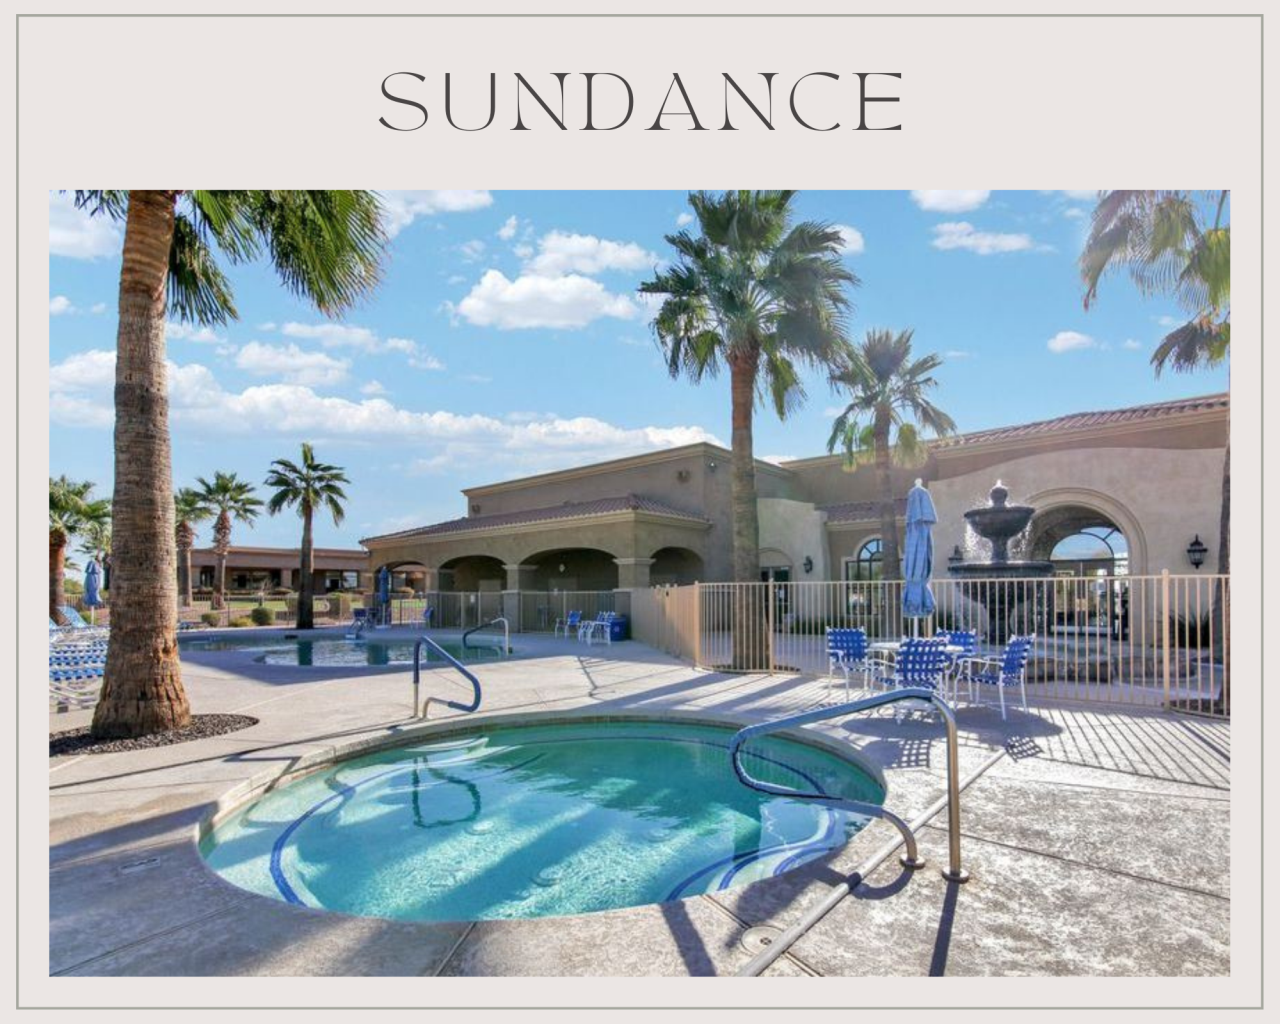 Sundance Arizona resales real estate and homes for sale MLS listings